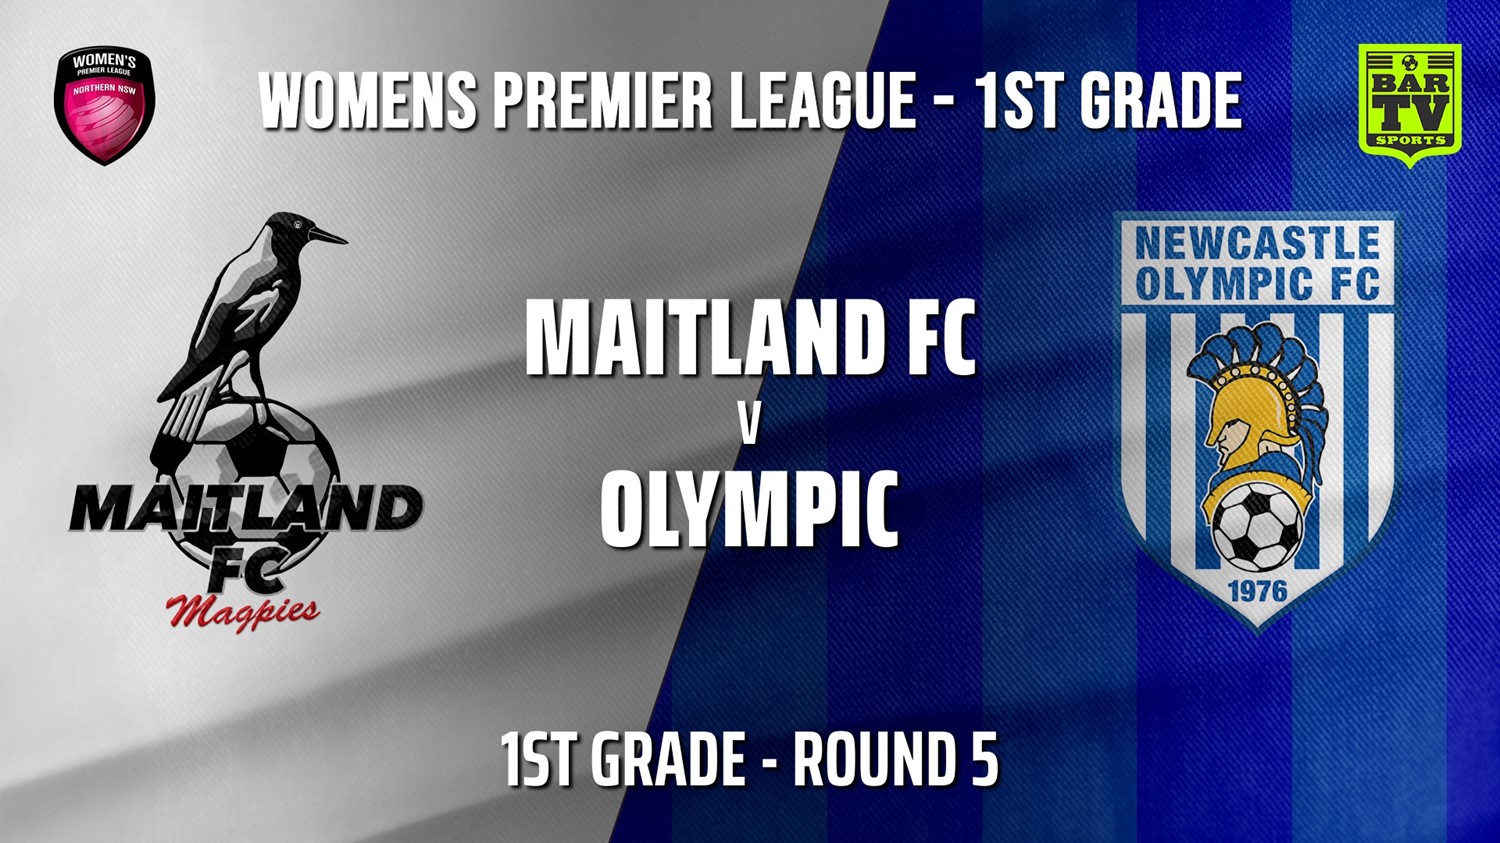 210430-Herald Women’s Premier League Round 5 - 1st Grade - Maitland FC (women) v Newcastle Olympic (Women's) Minigame Slate Image